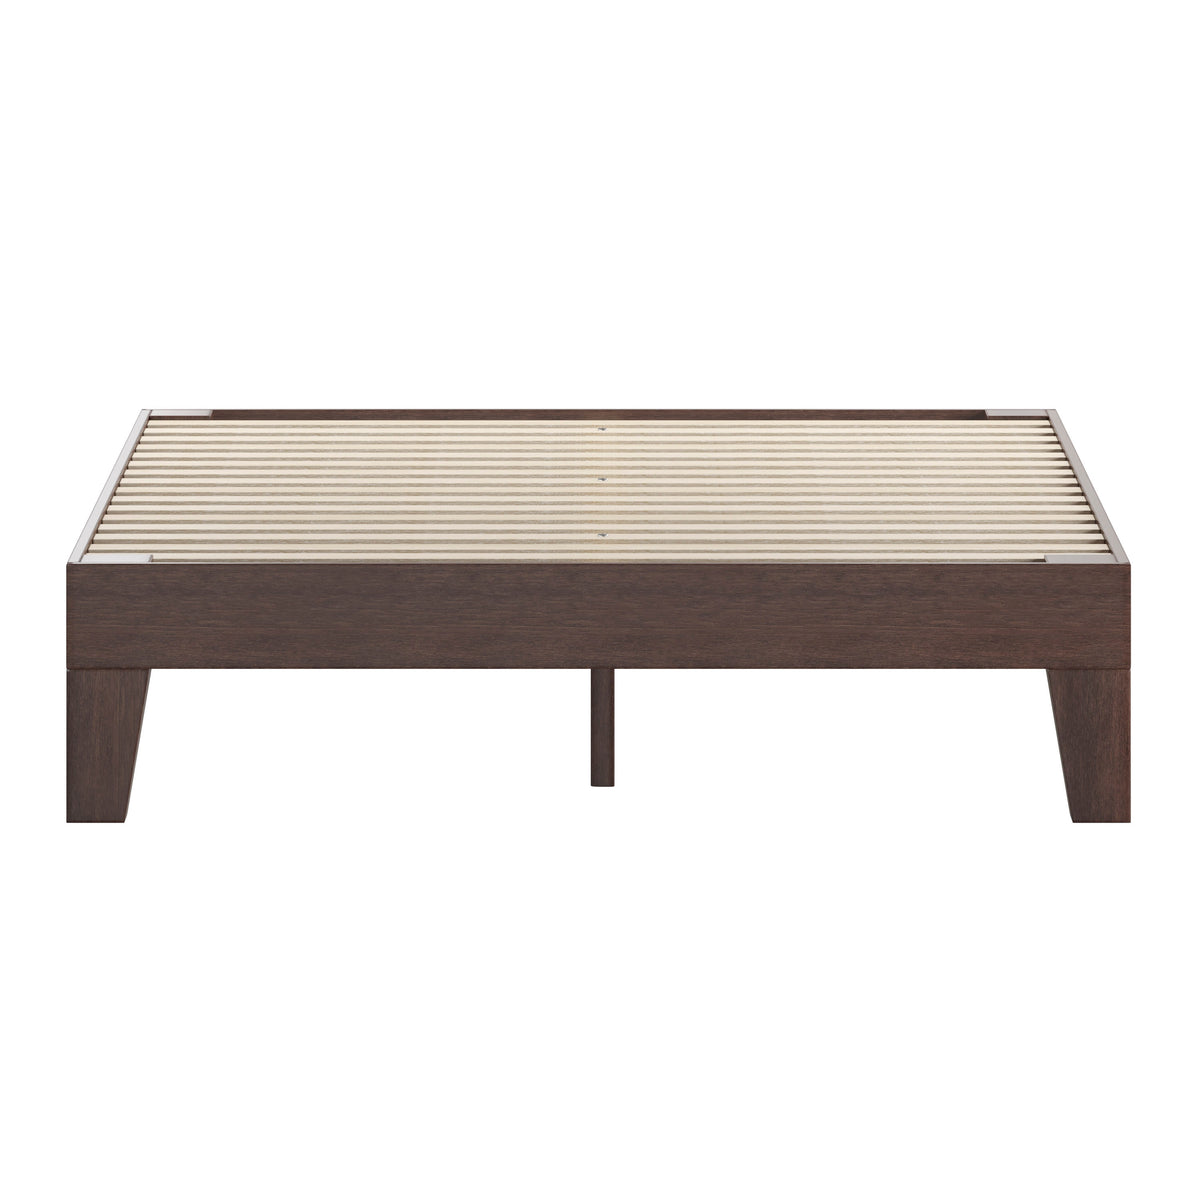 Walnut,Twin |#| Wood Platform Bed with 14 Wooden Support Slats in Walnut - Twin